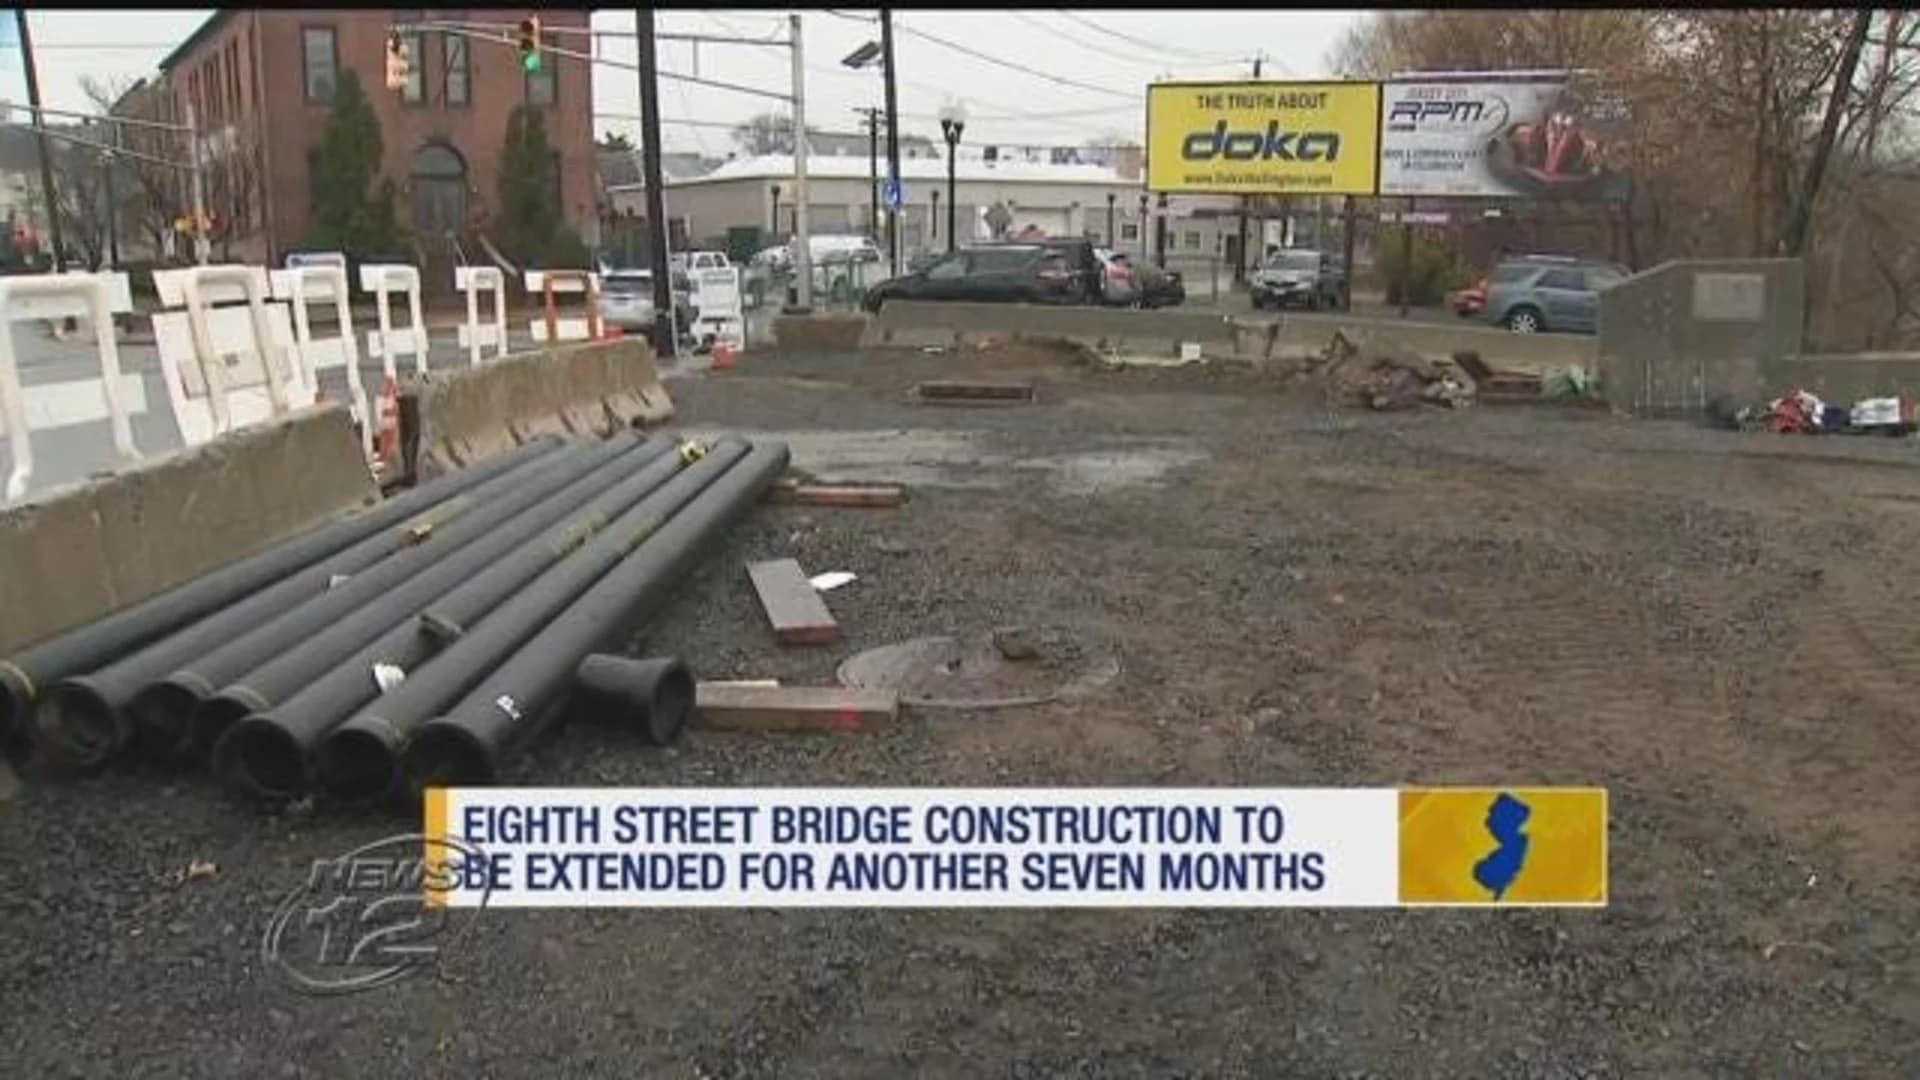 Eighth Street Bridge construction delayed several months